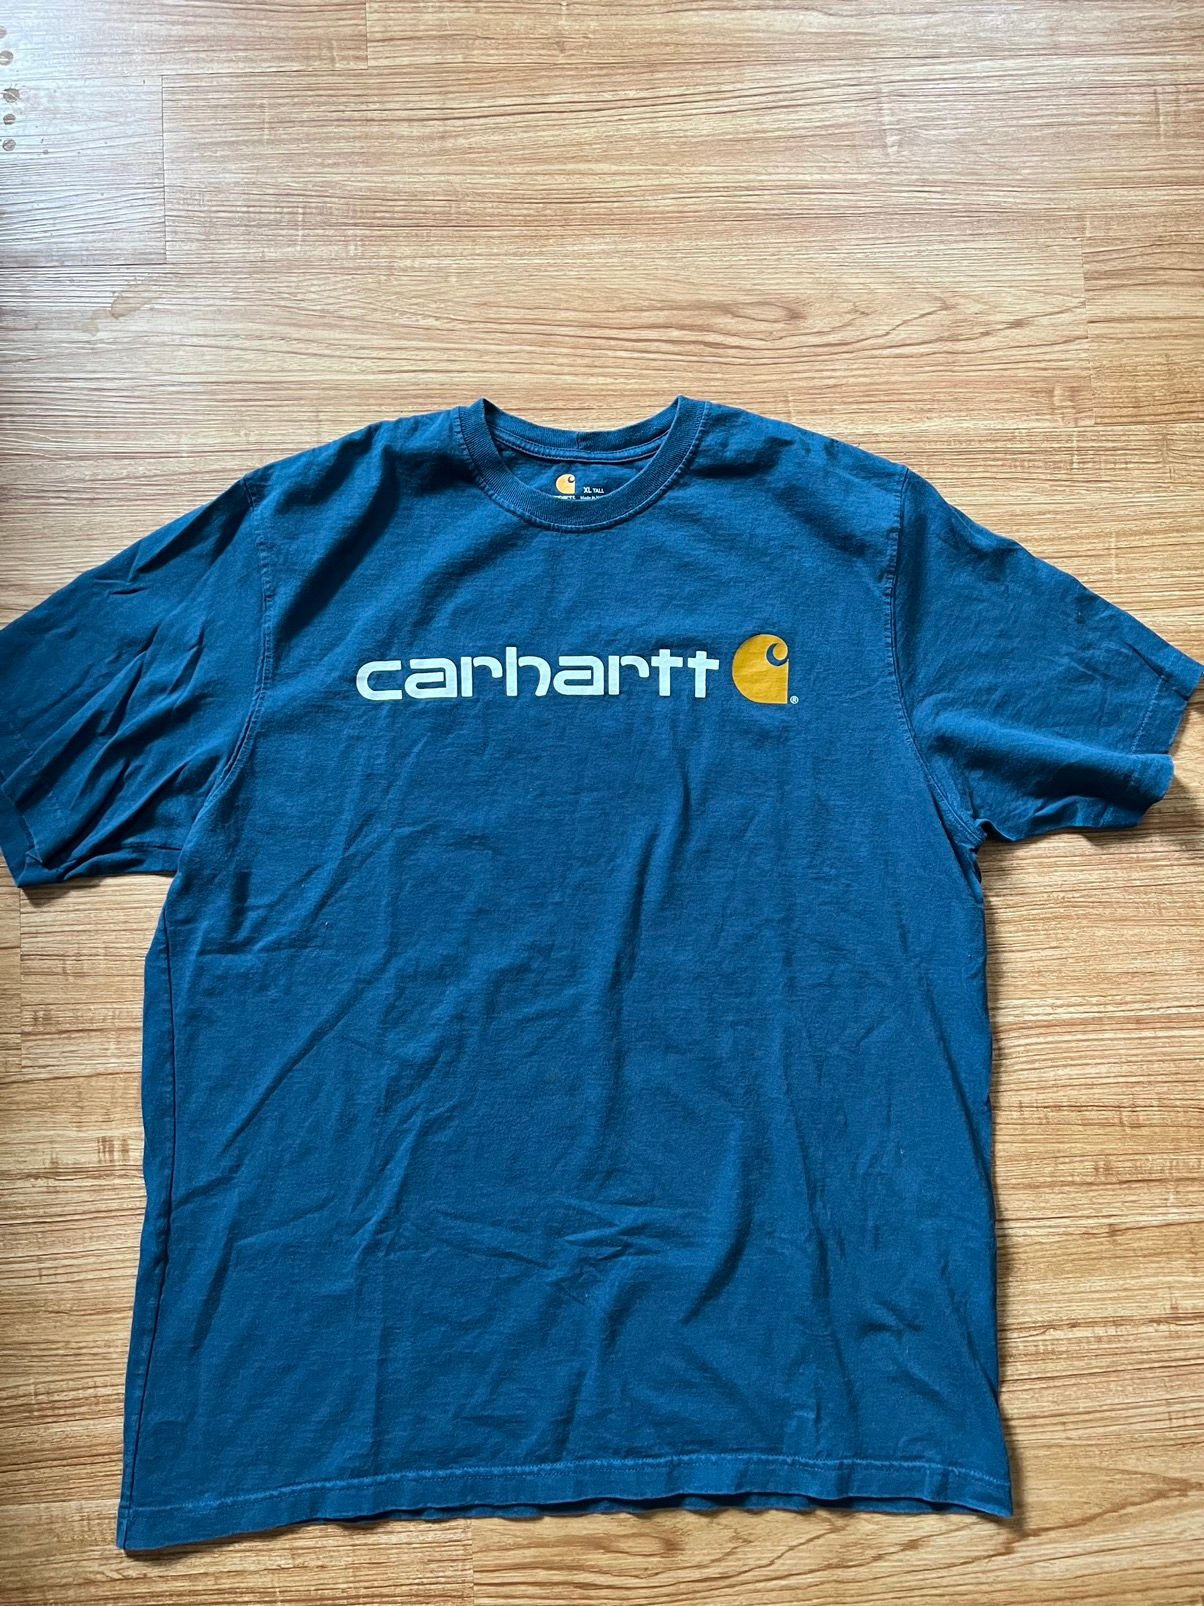 Carhartt Vintage Carharrt Original Fit Logo Spell Out Tee | Grailed